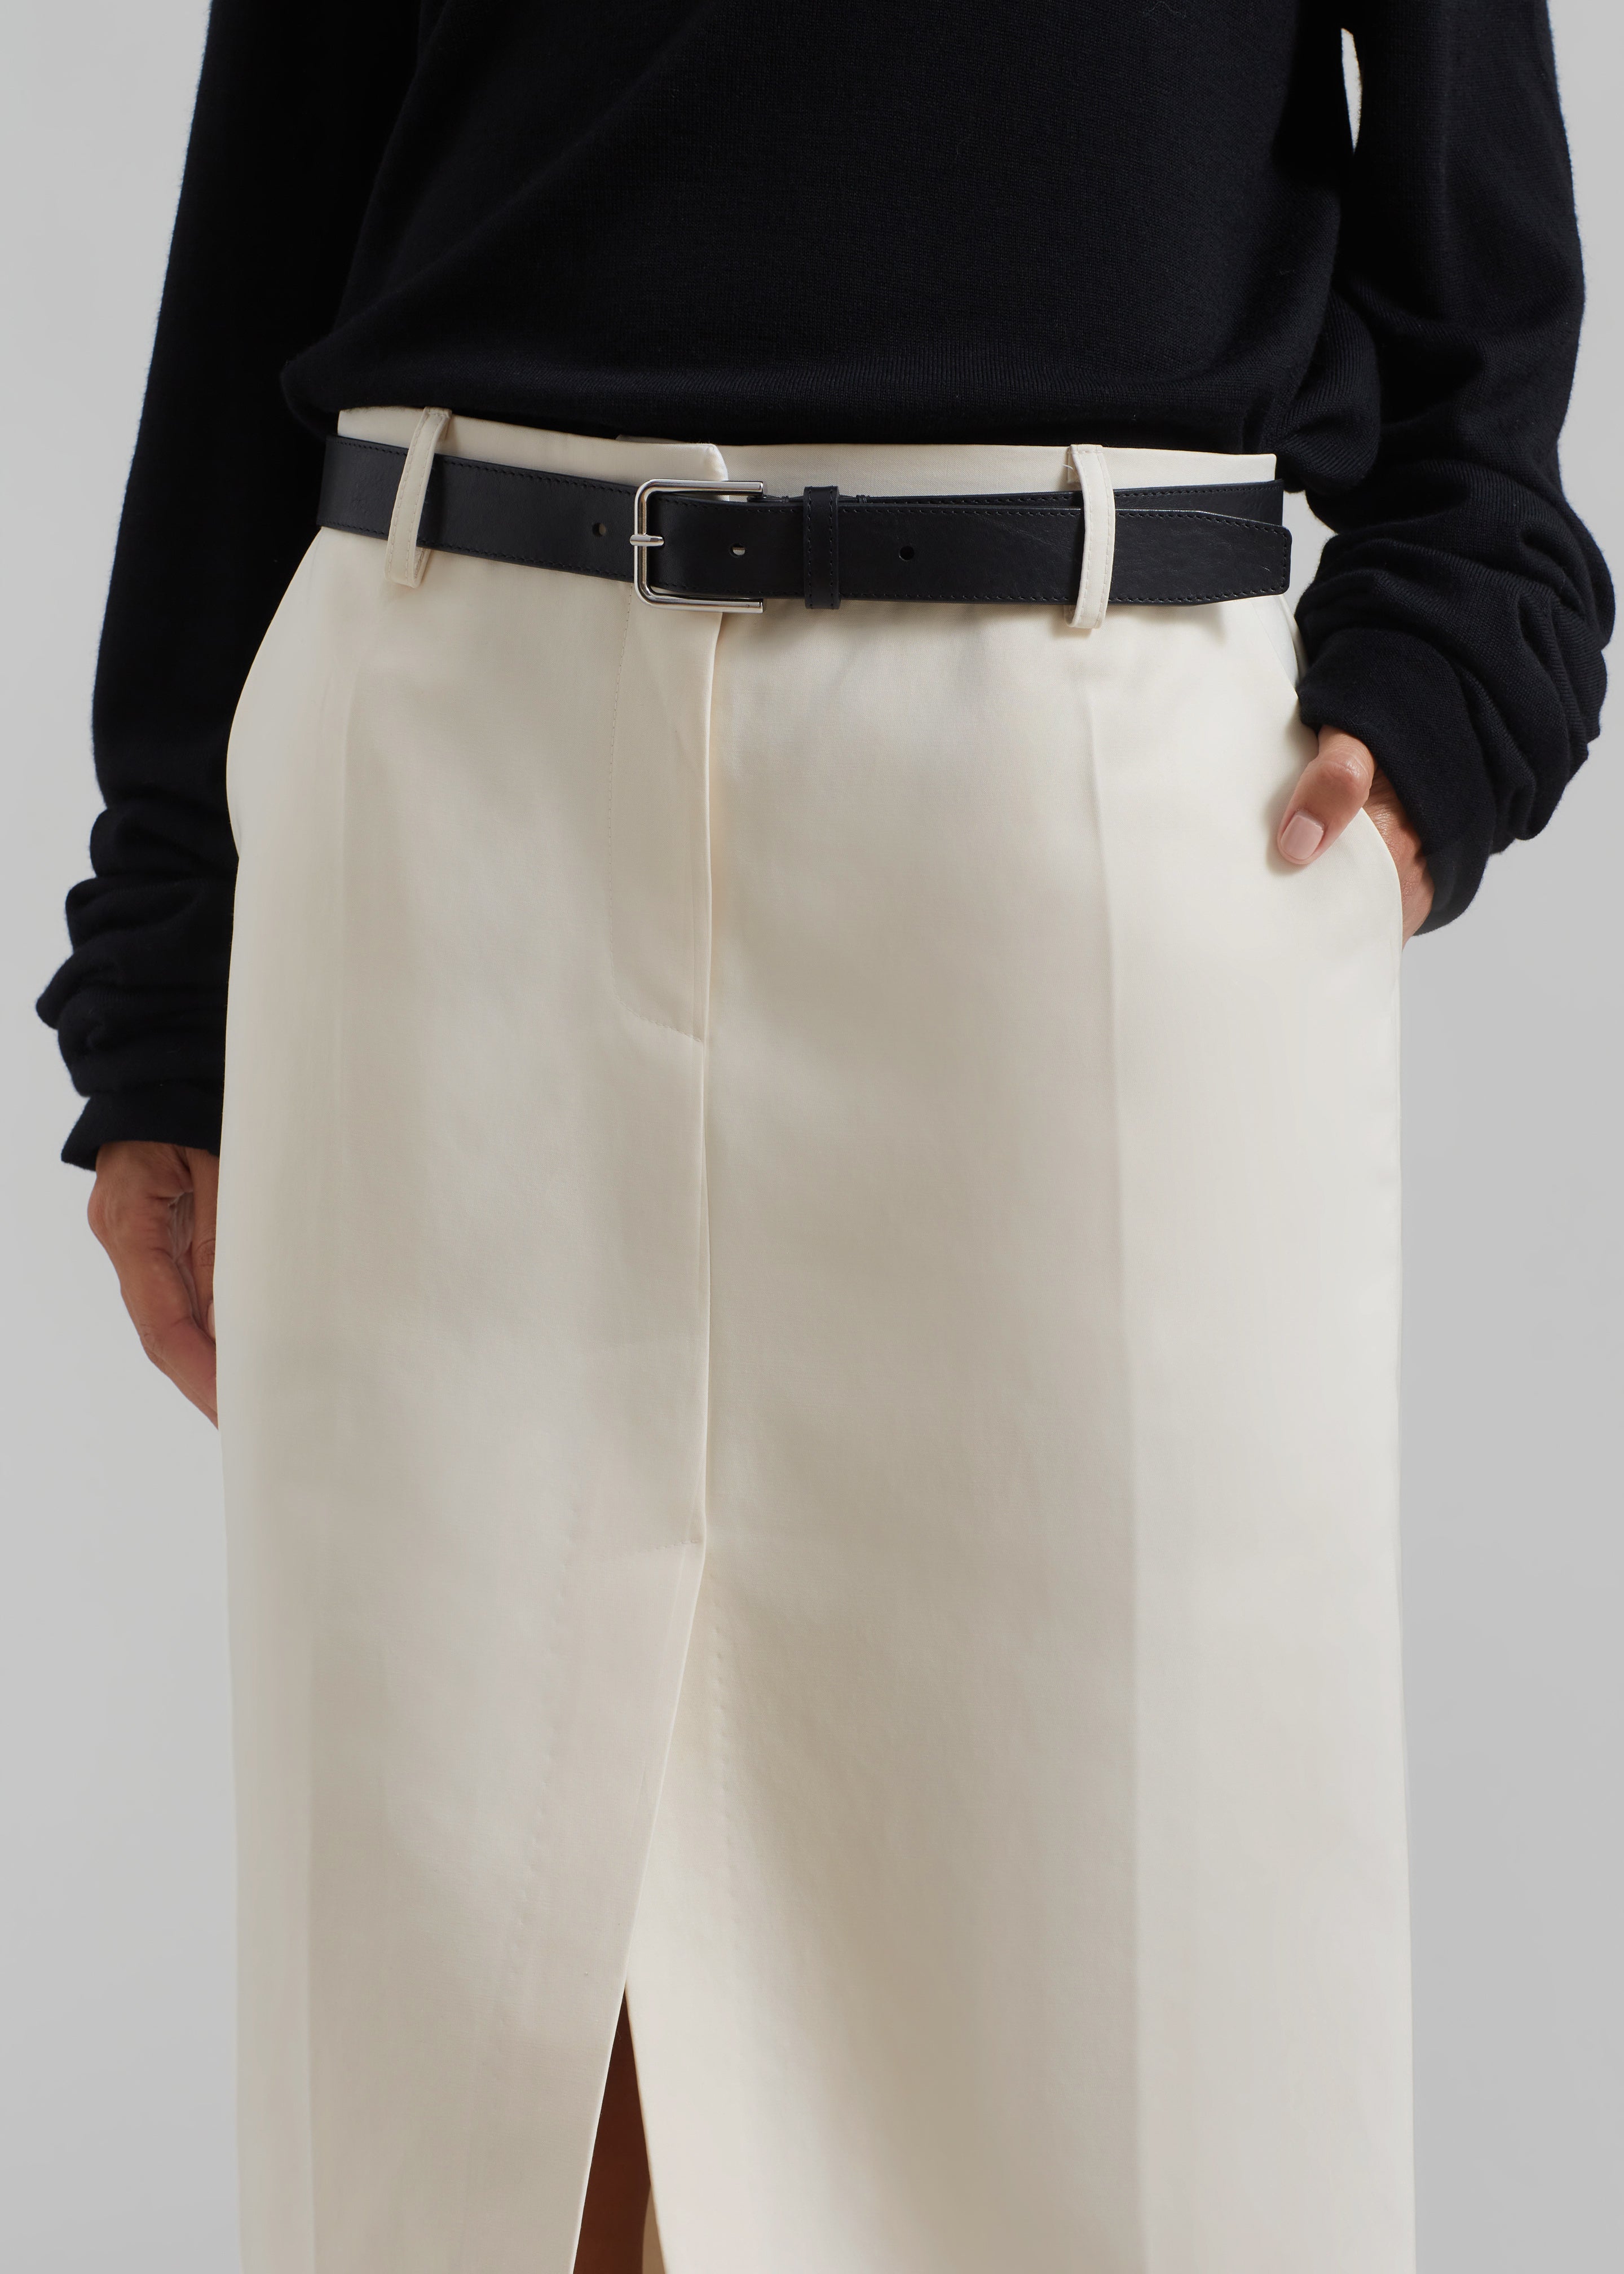 Carley Long Skirt - Cream - 4